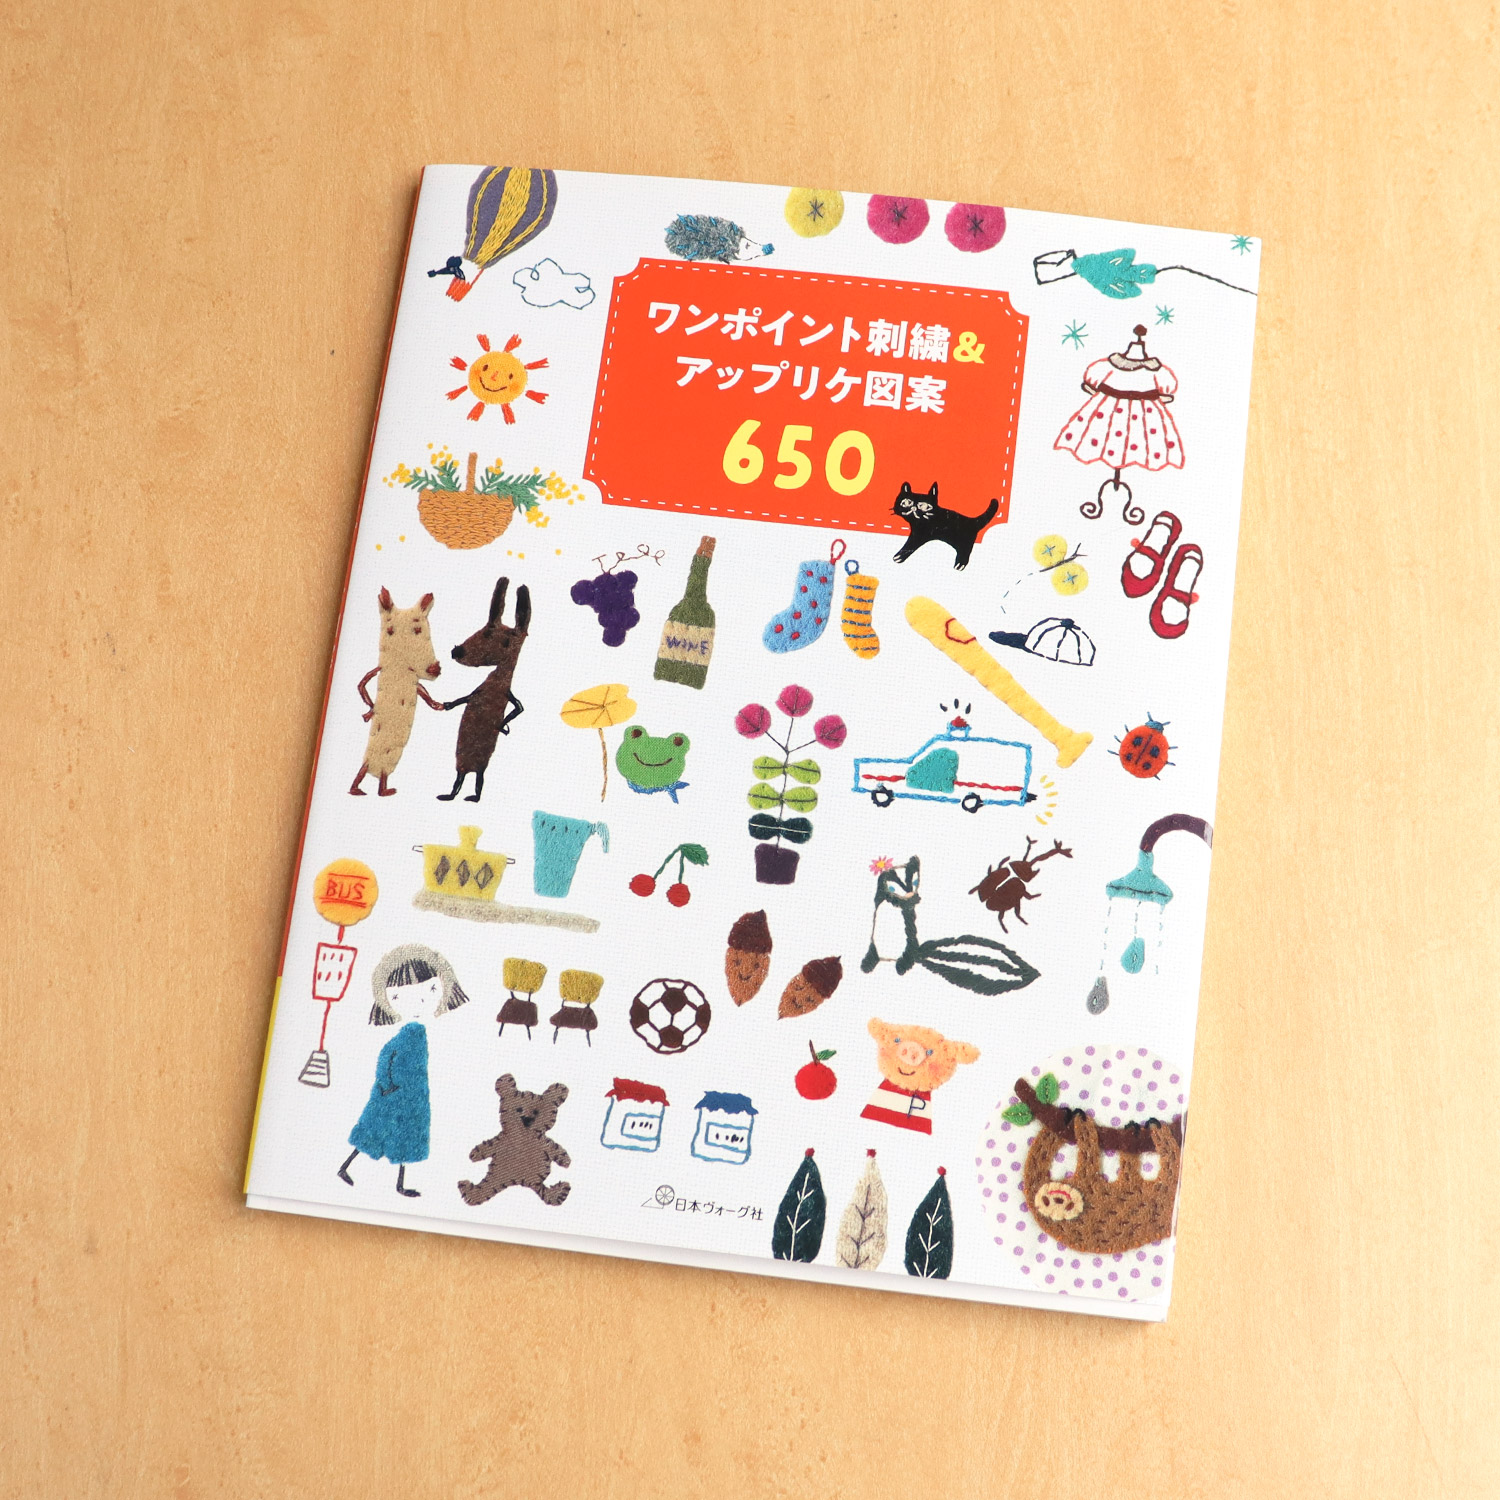 NV70763 ワンポイント刺繍&アップリケ図案650/日本ヴォーグ社(冊)